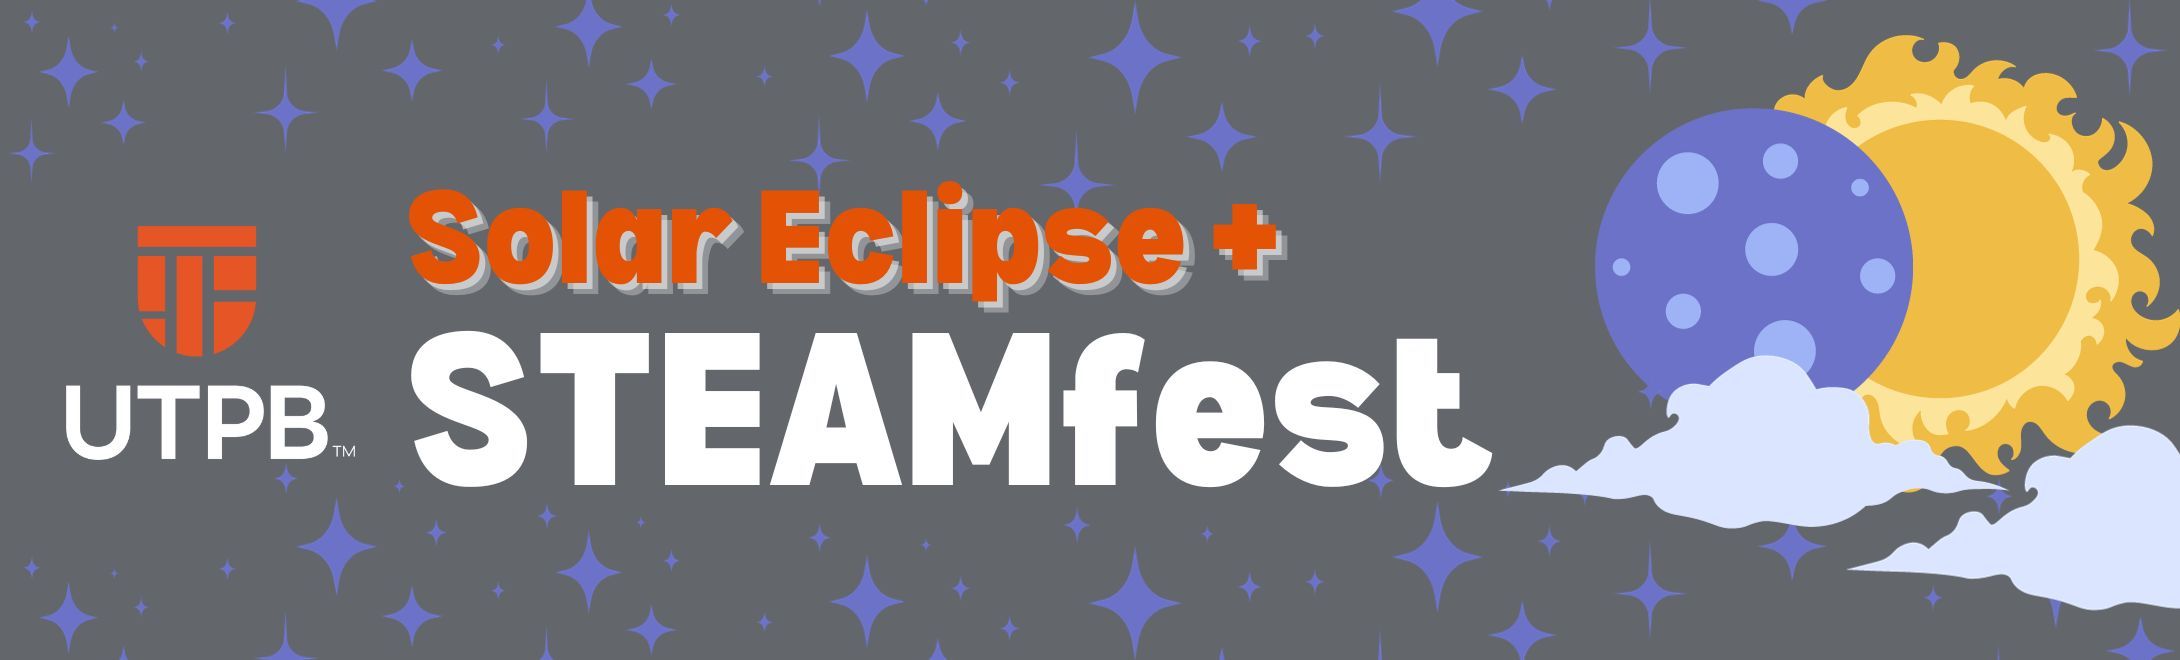 solar eclipse and steamfest logo banner